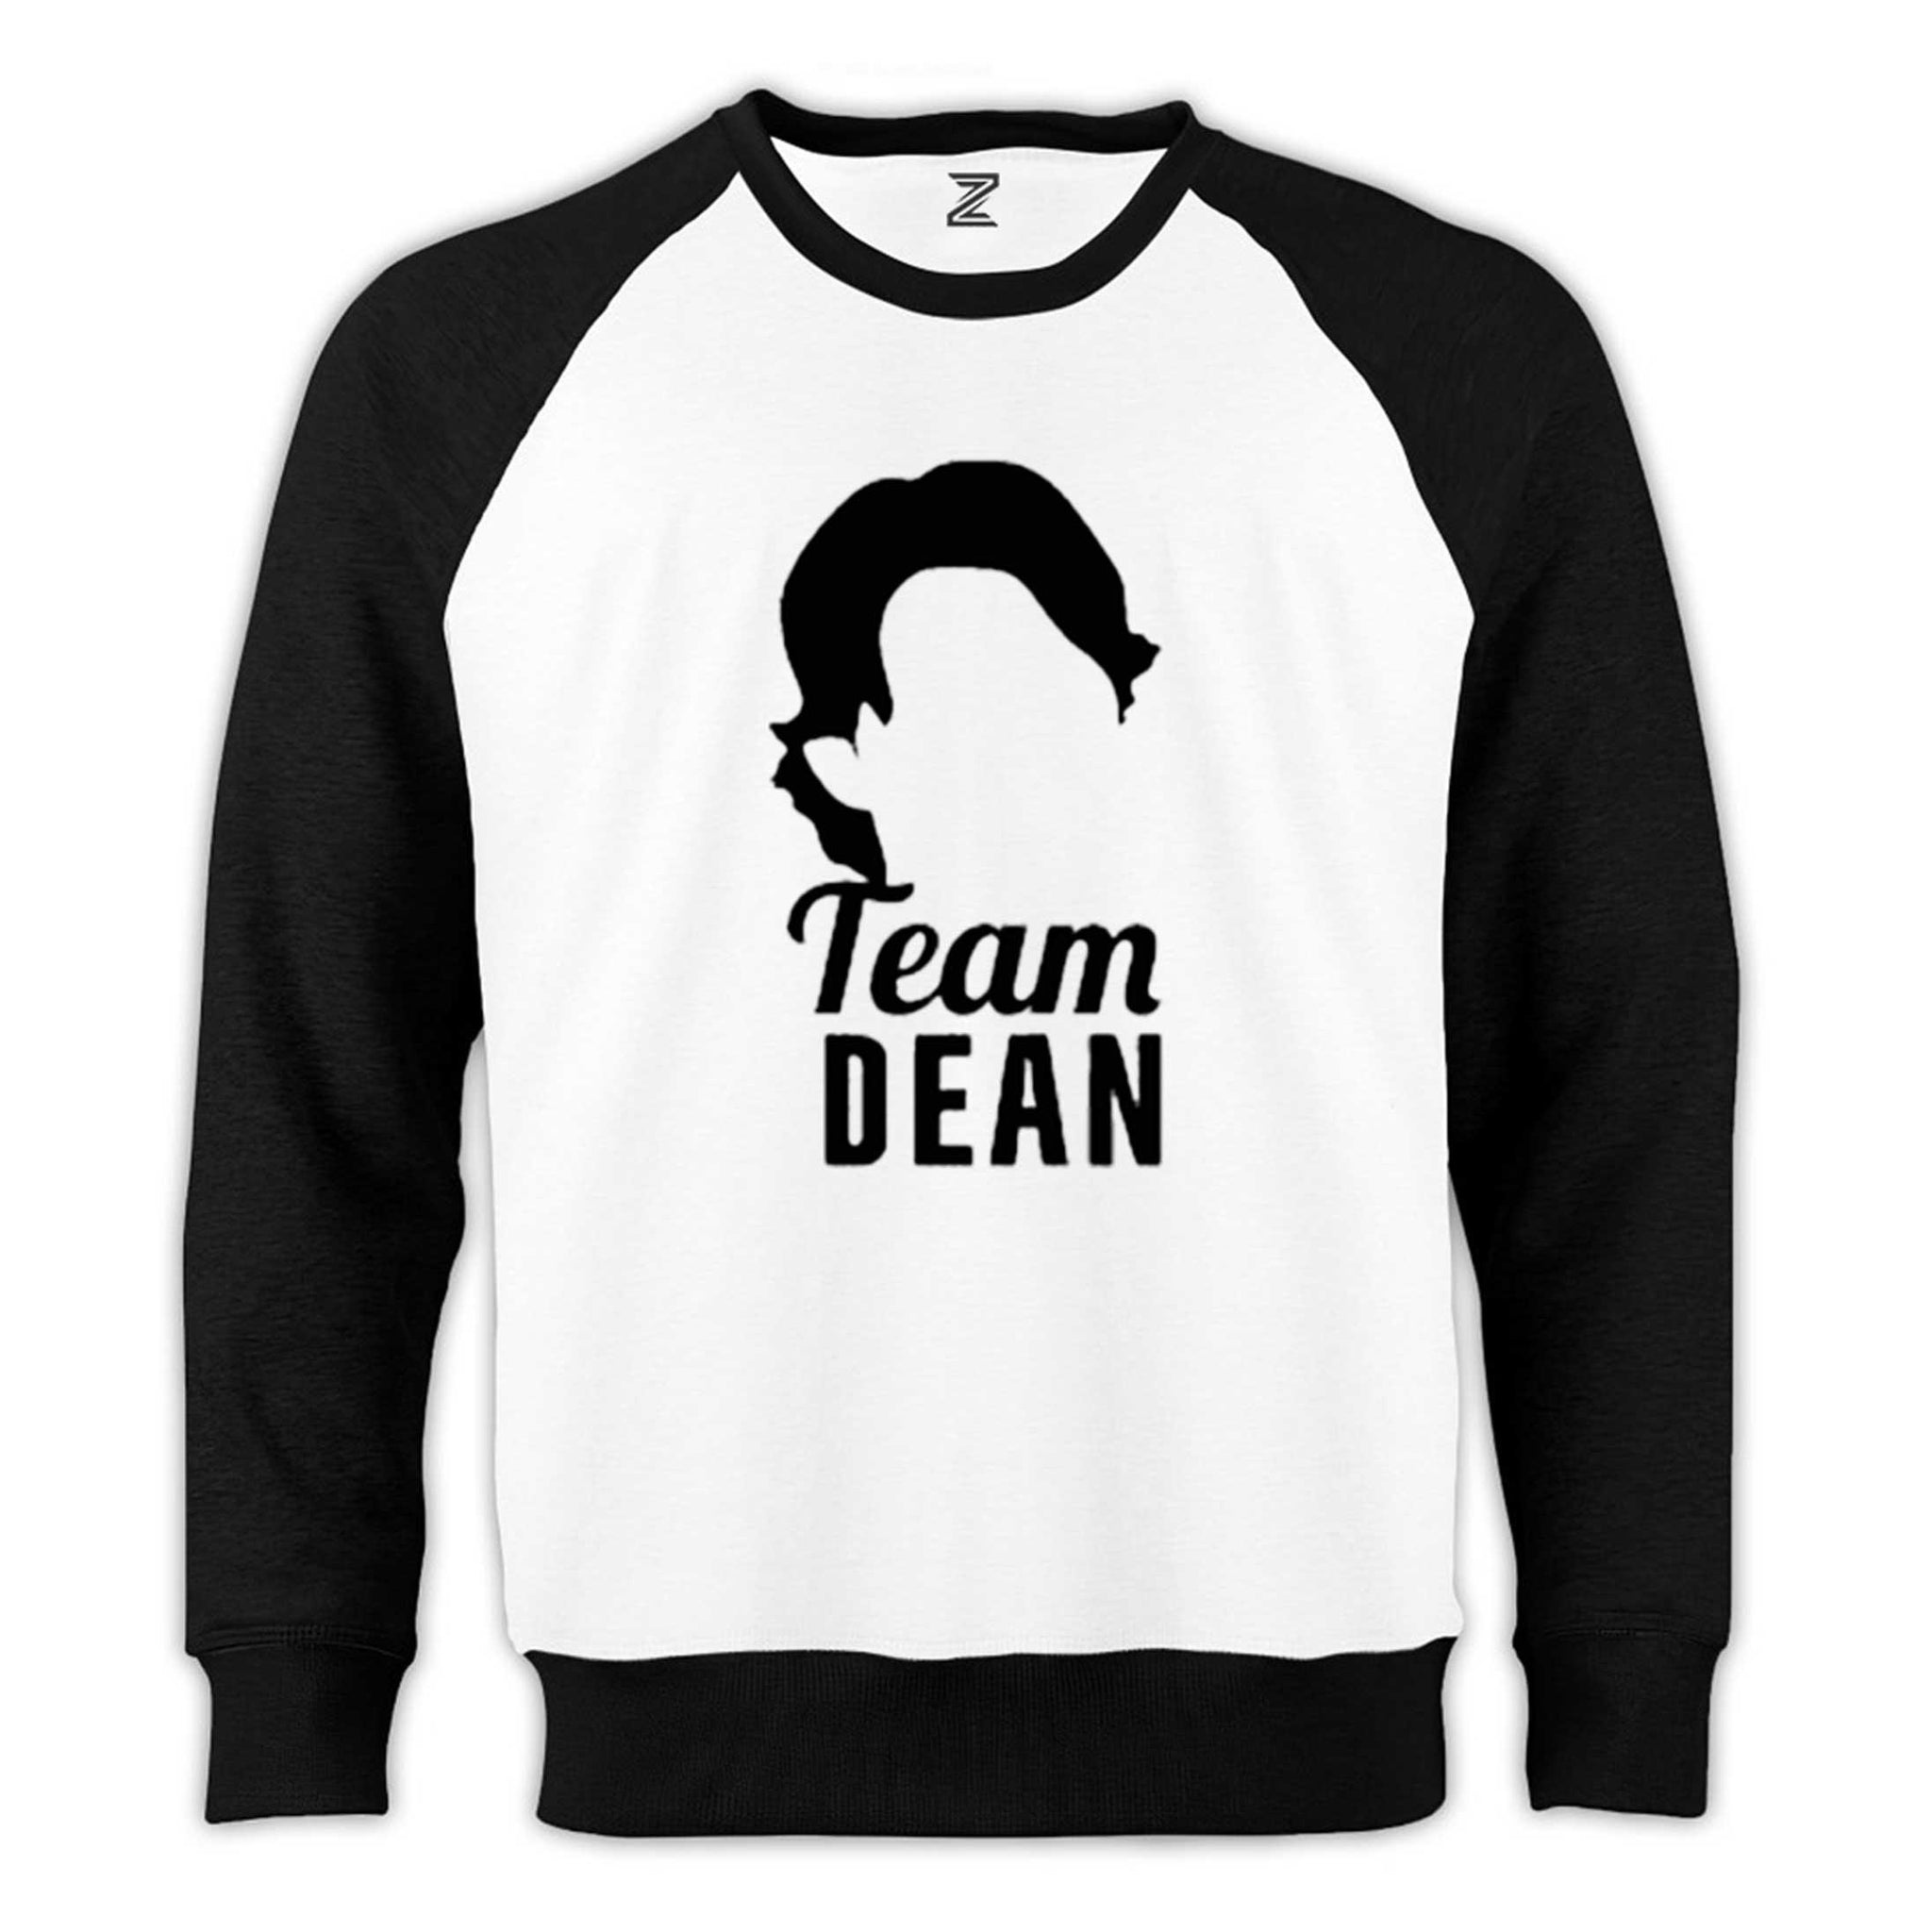 Glimore Girls Team Dean Reglan Kol Beyaz Sweatshirt - Zepplingiyim